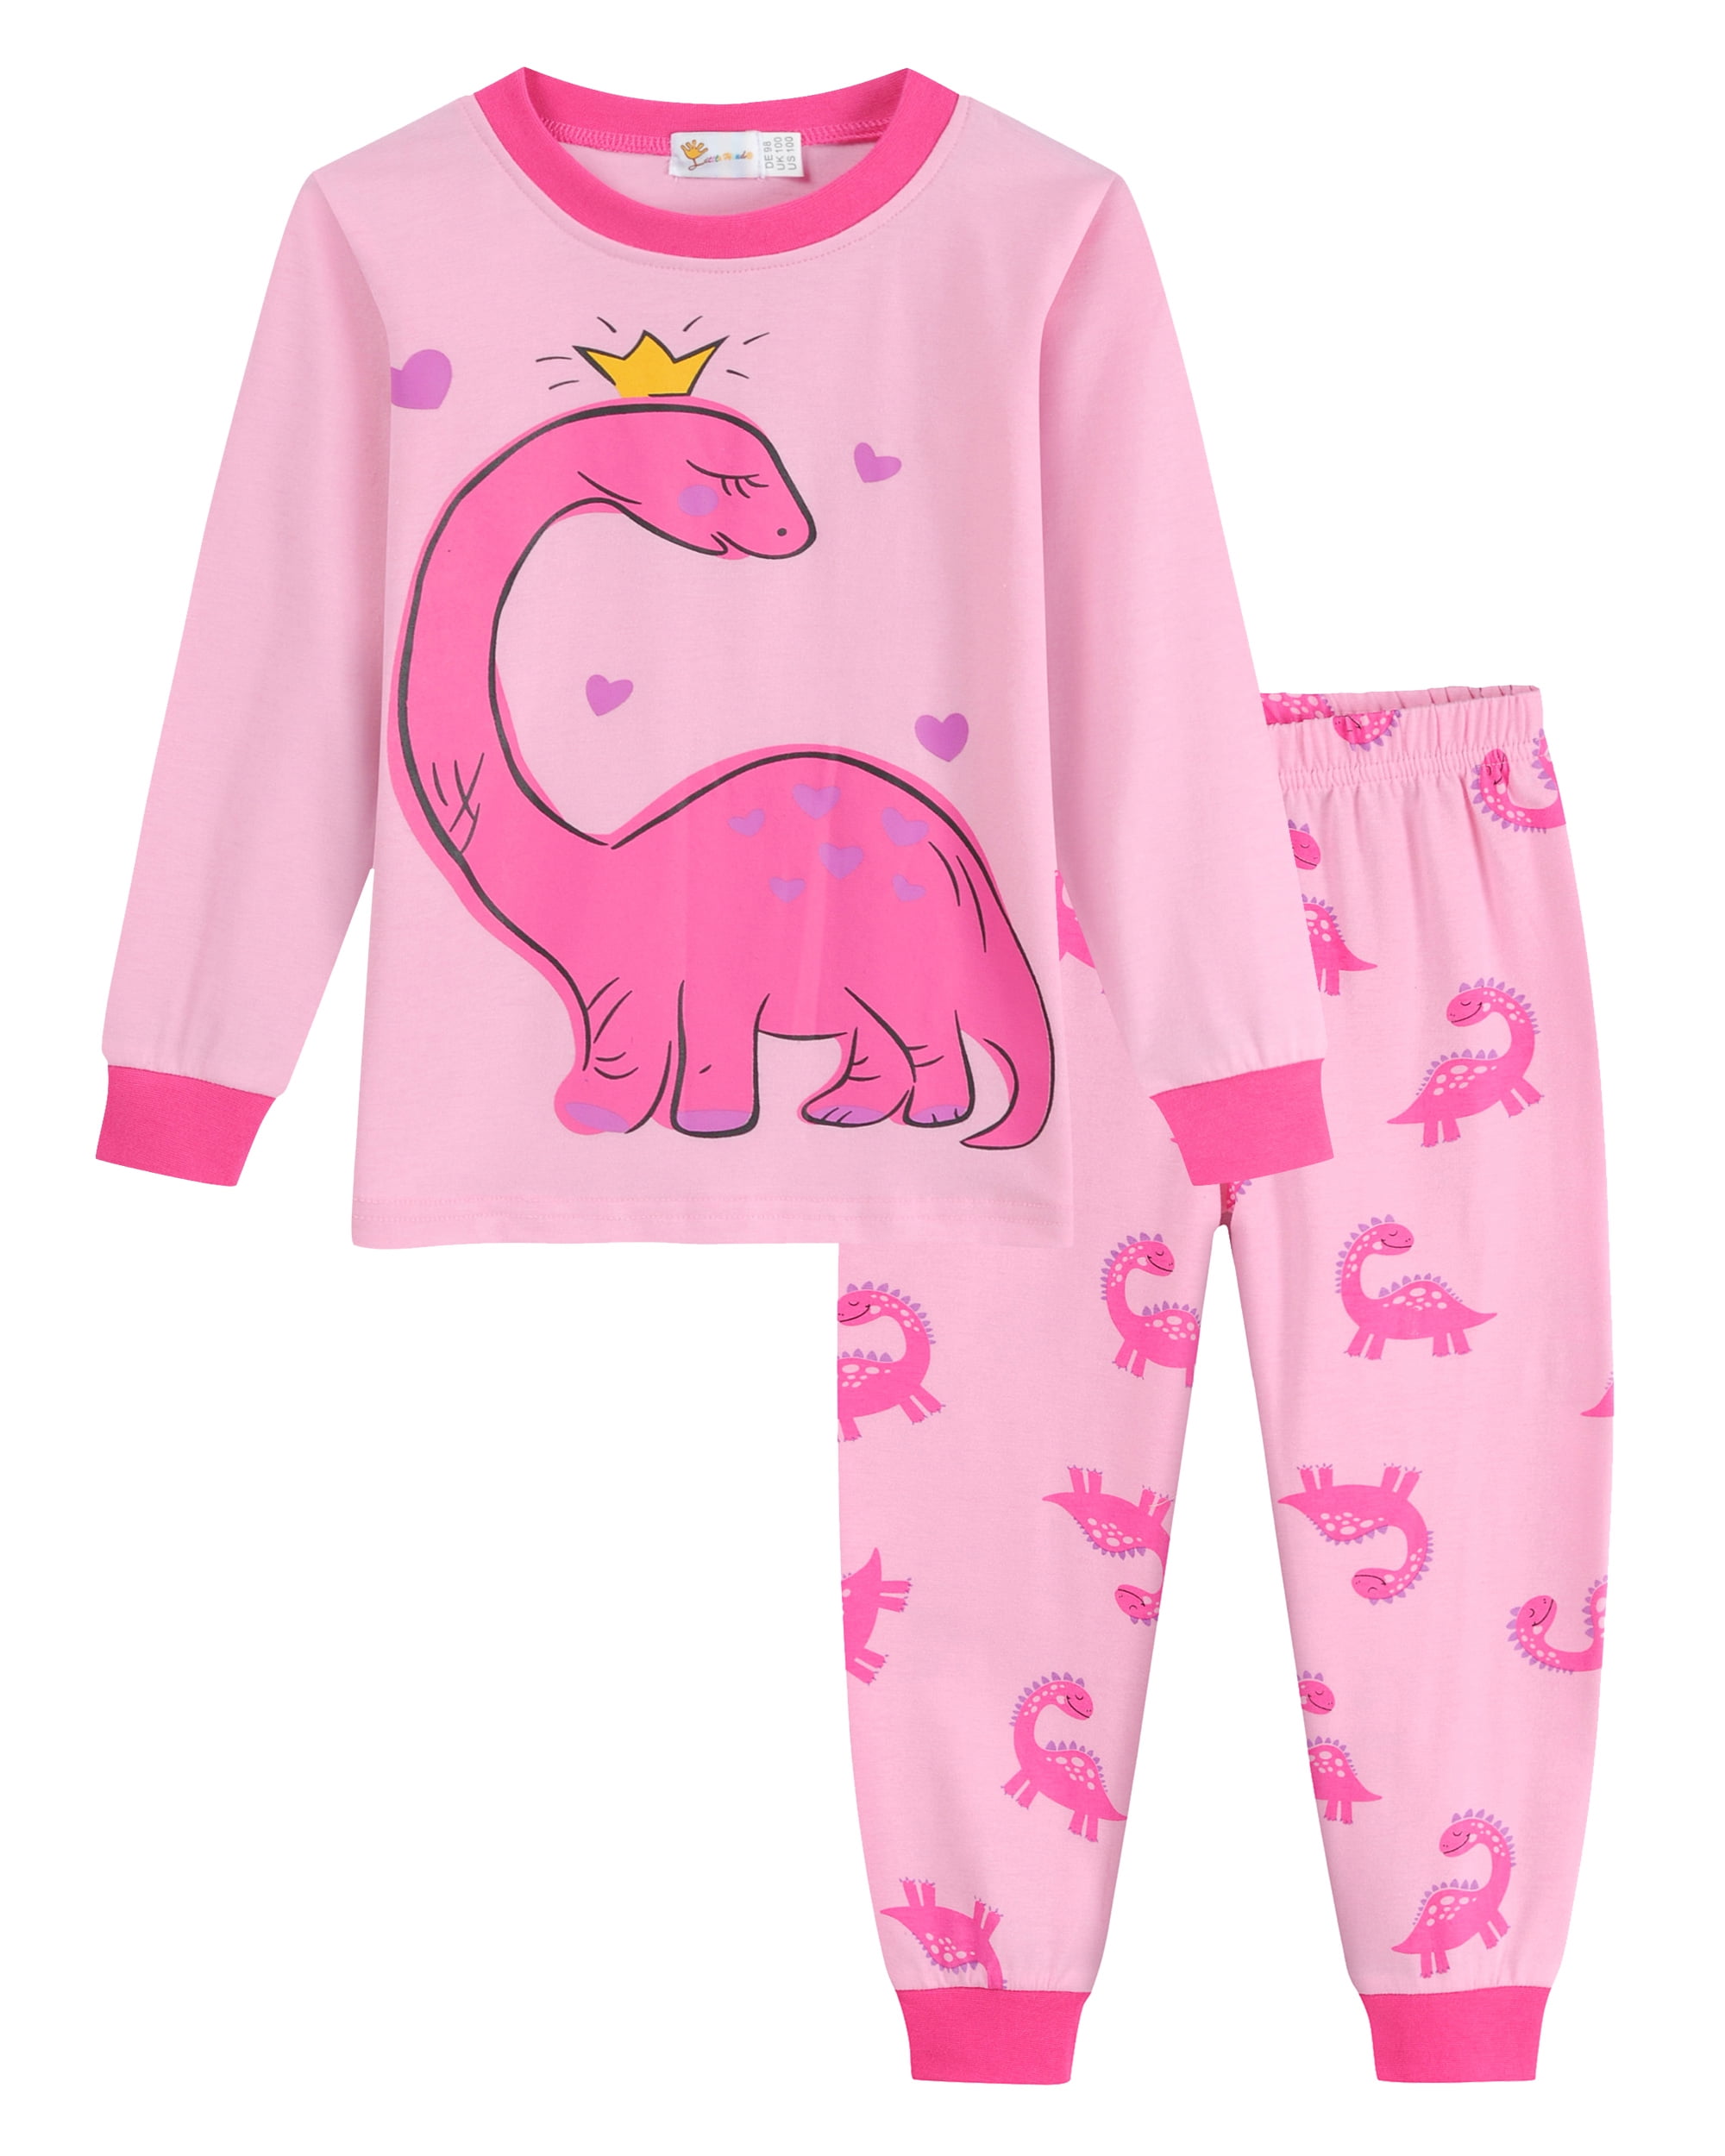 Little Hand Toddler Boys Pajamas Dinosaur 100% Cotton Planets Sleepwear Pjs Sets Long Sleeve Excavator Jammies 